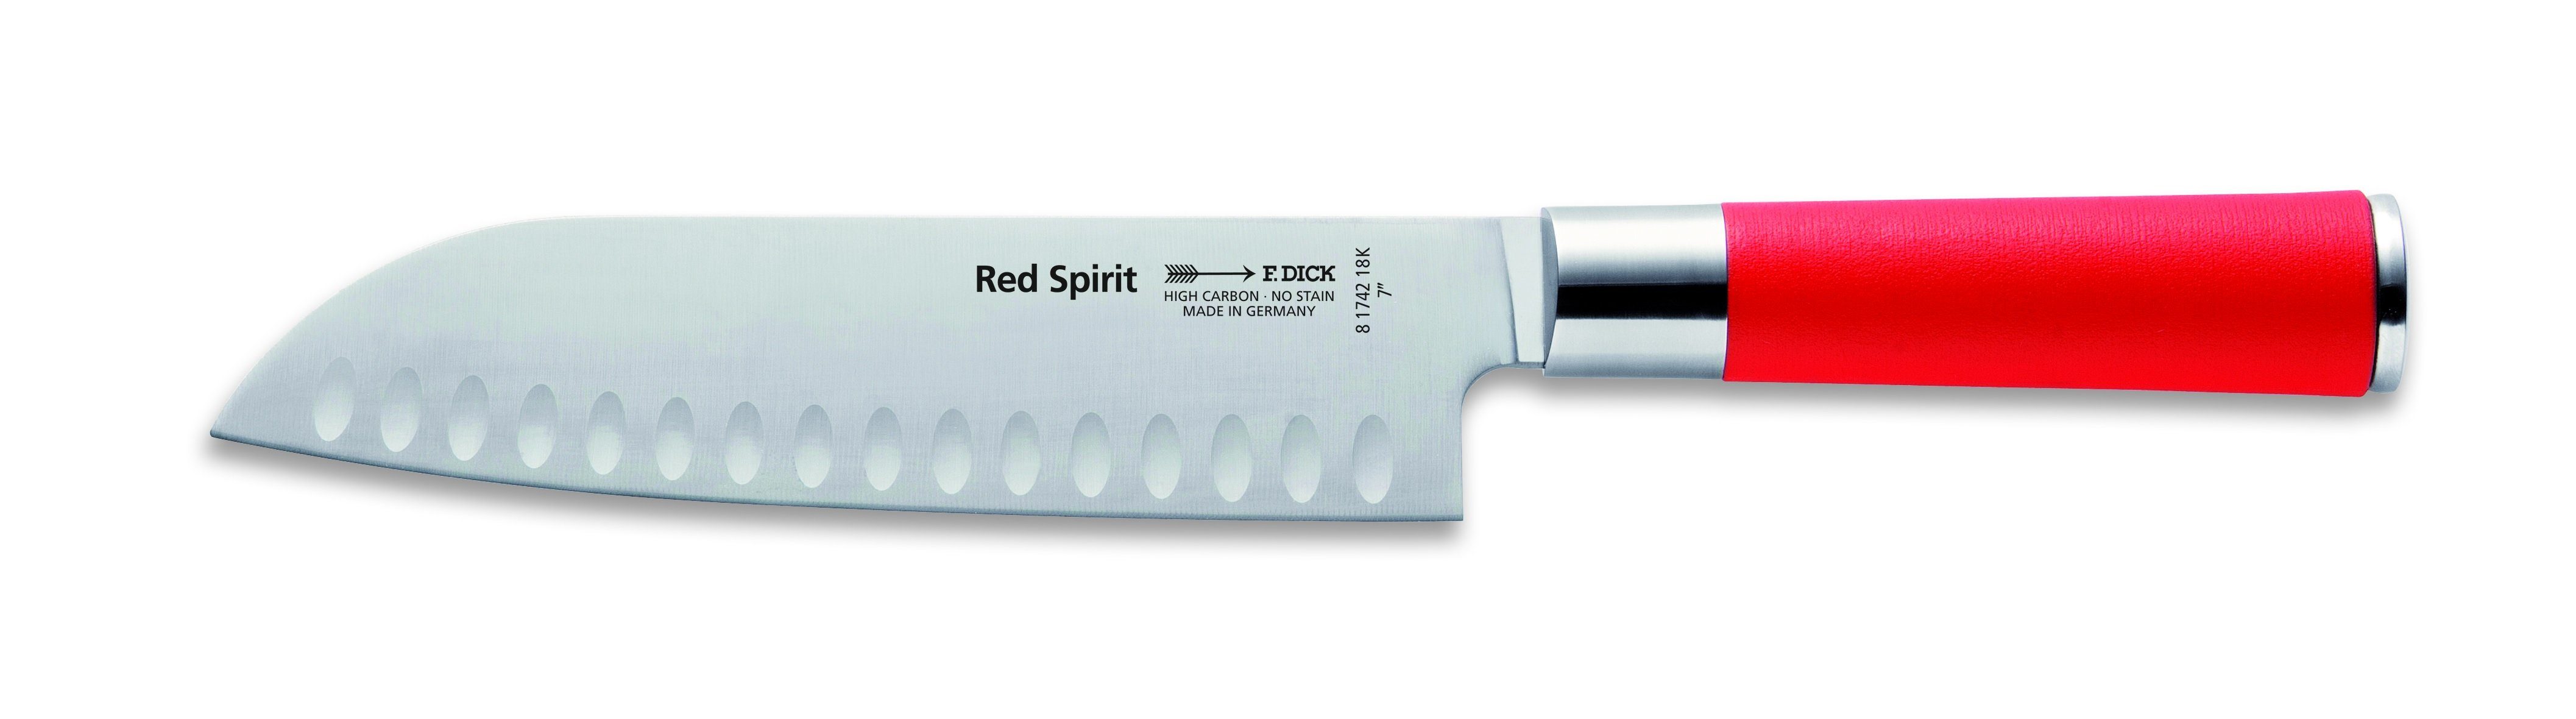 Dick Red mit Dick Klinge 8174218K Santoku Spirit 18 Serie Messer Kullen Santokumesser der